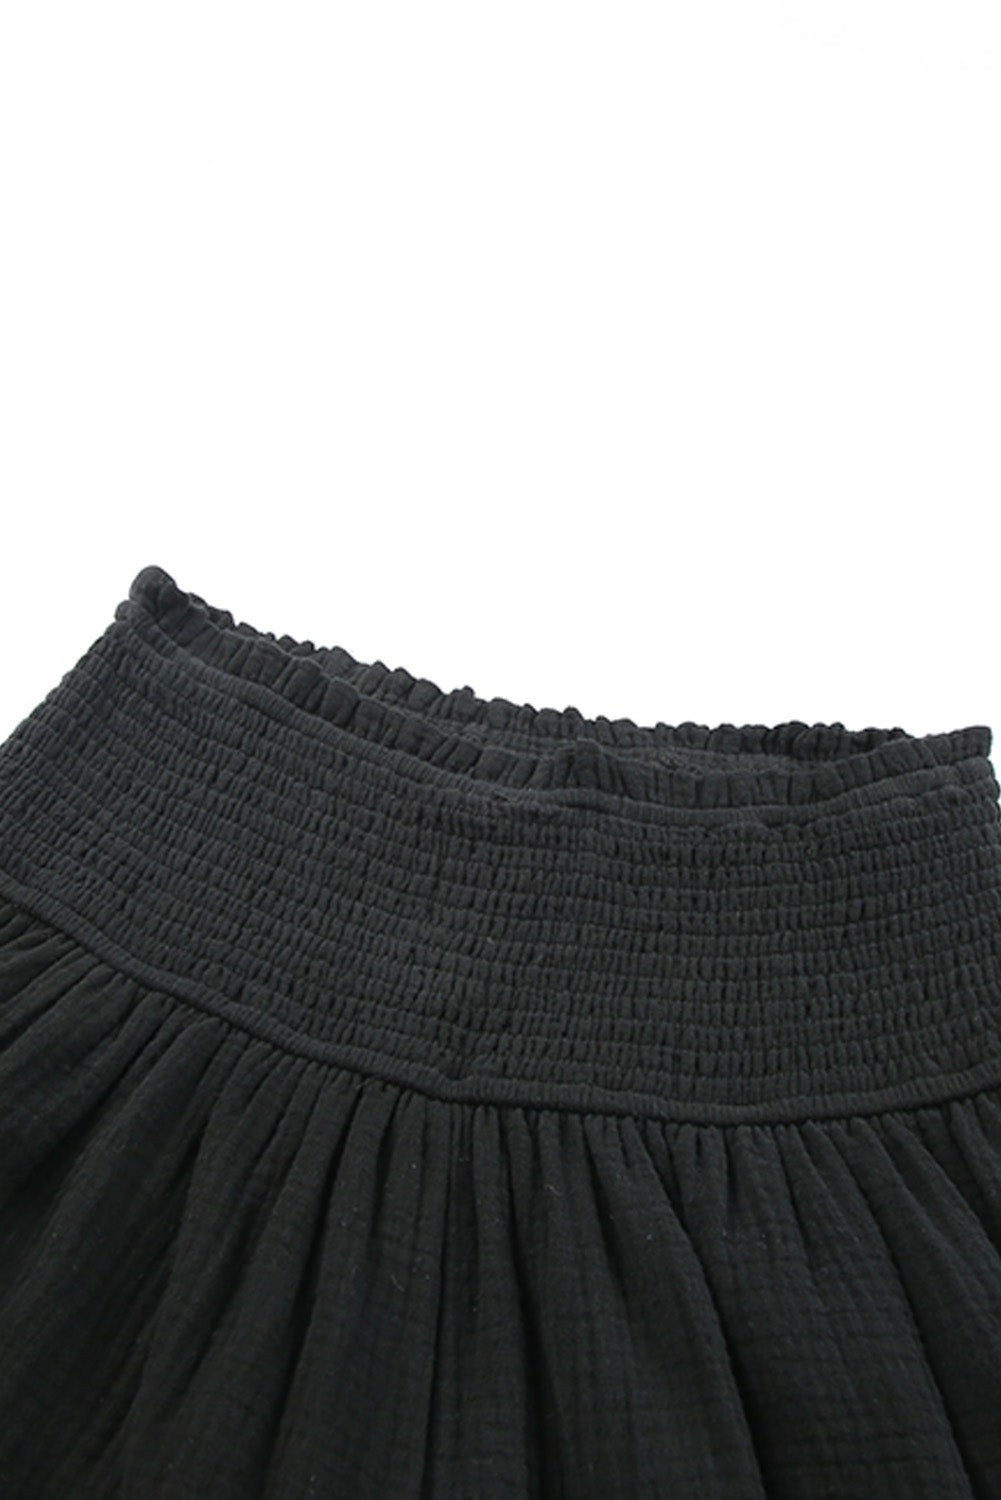 Black Smocked High Waist Ruffle Shorts Casual Shorts JT's Designer Fashion